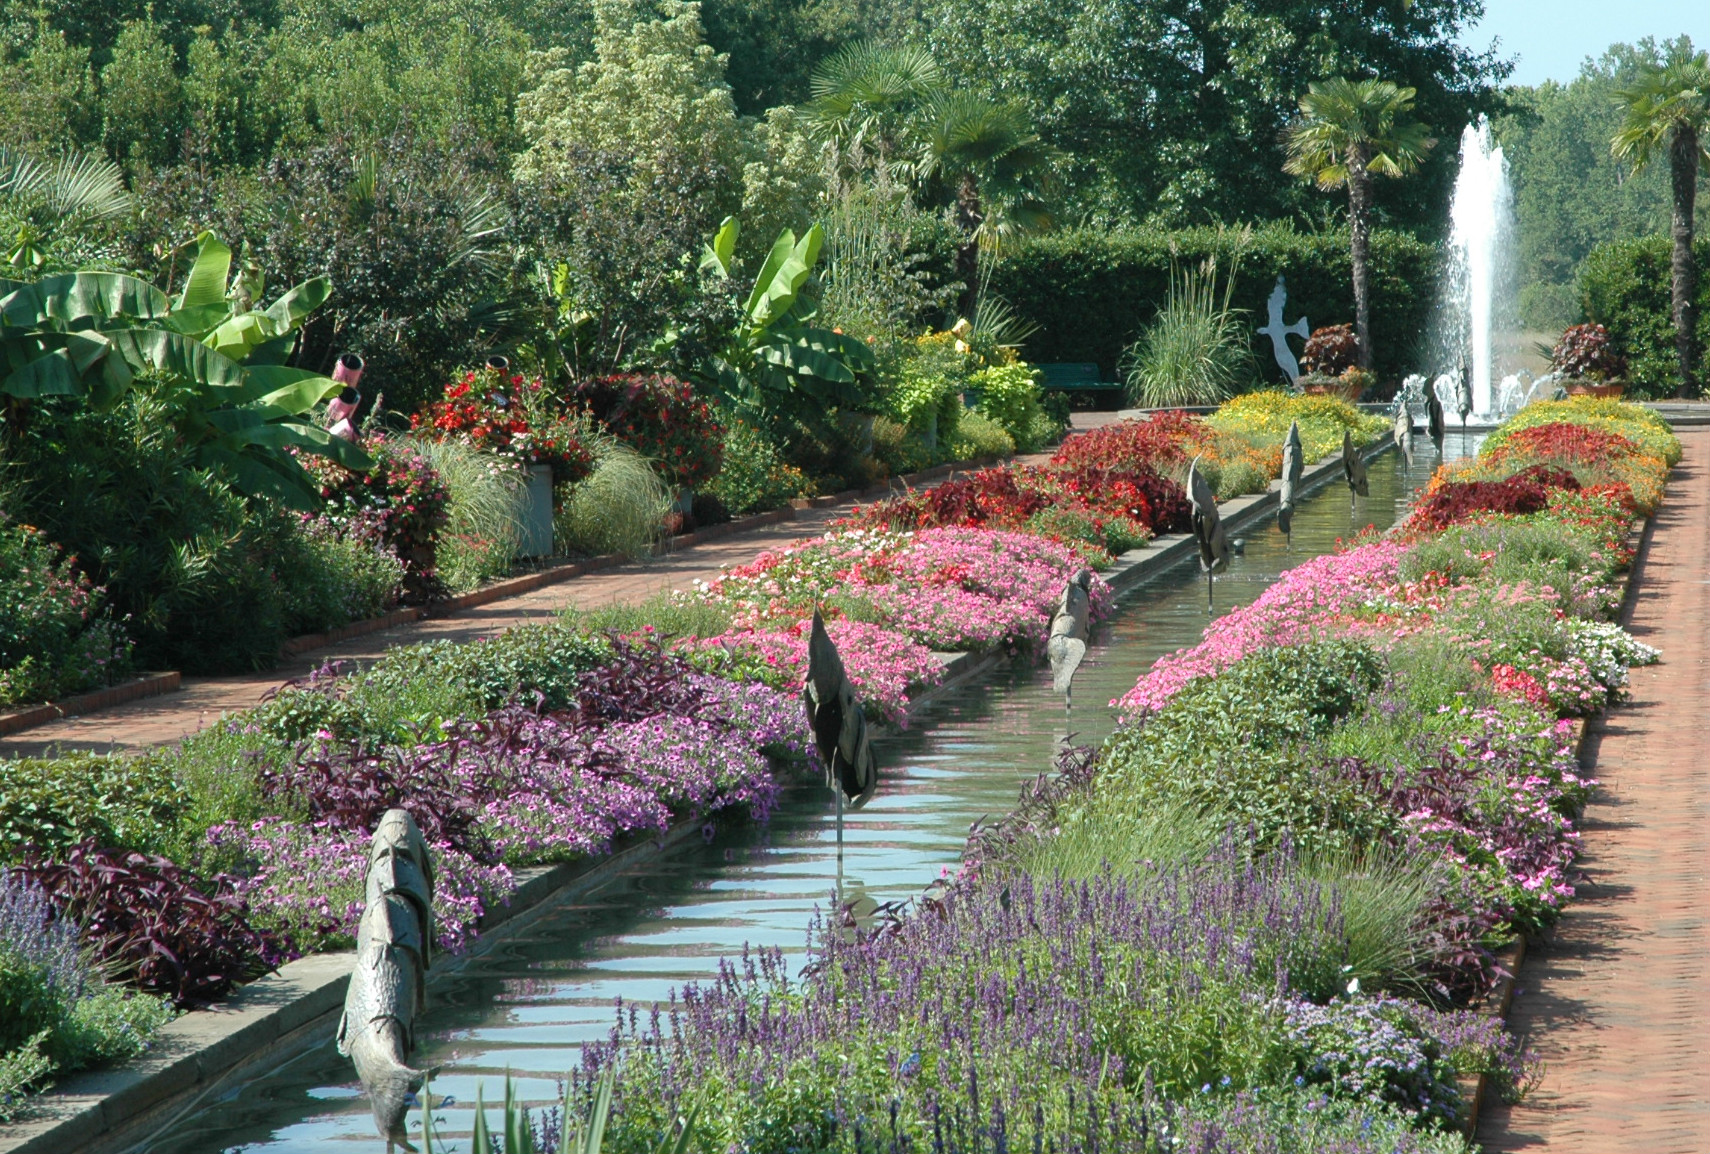 Explore The Garden - Daniel Stowe Botanical Garden